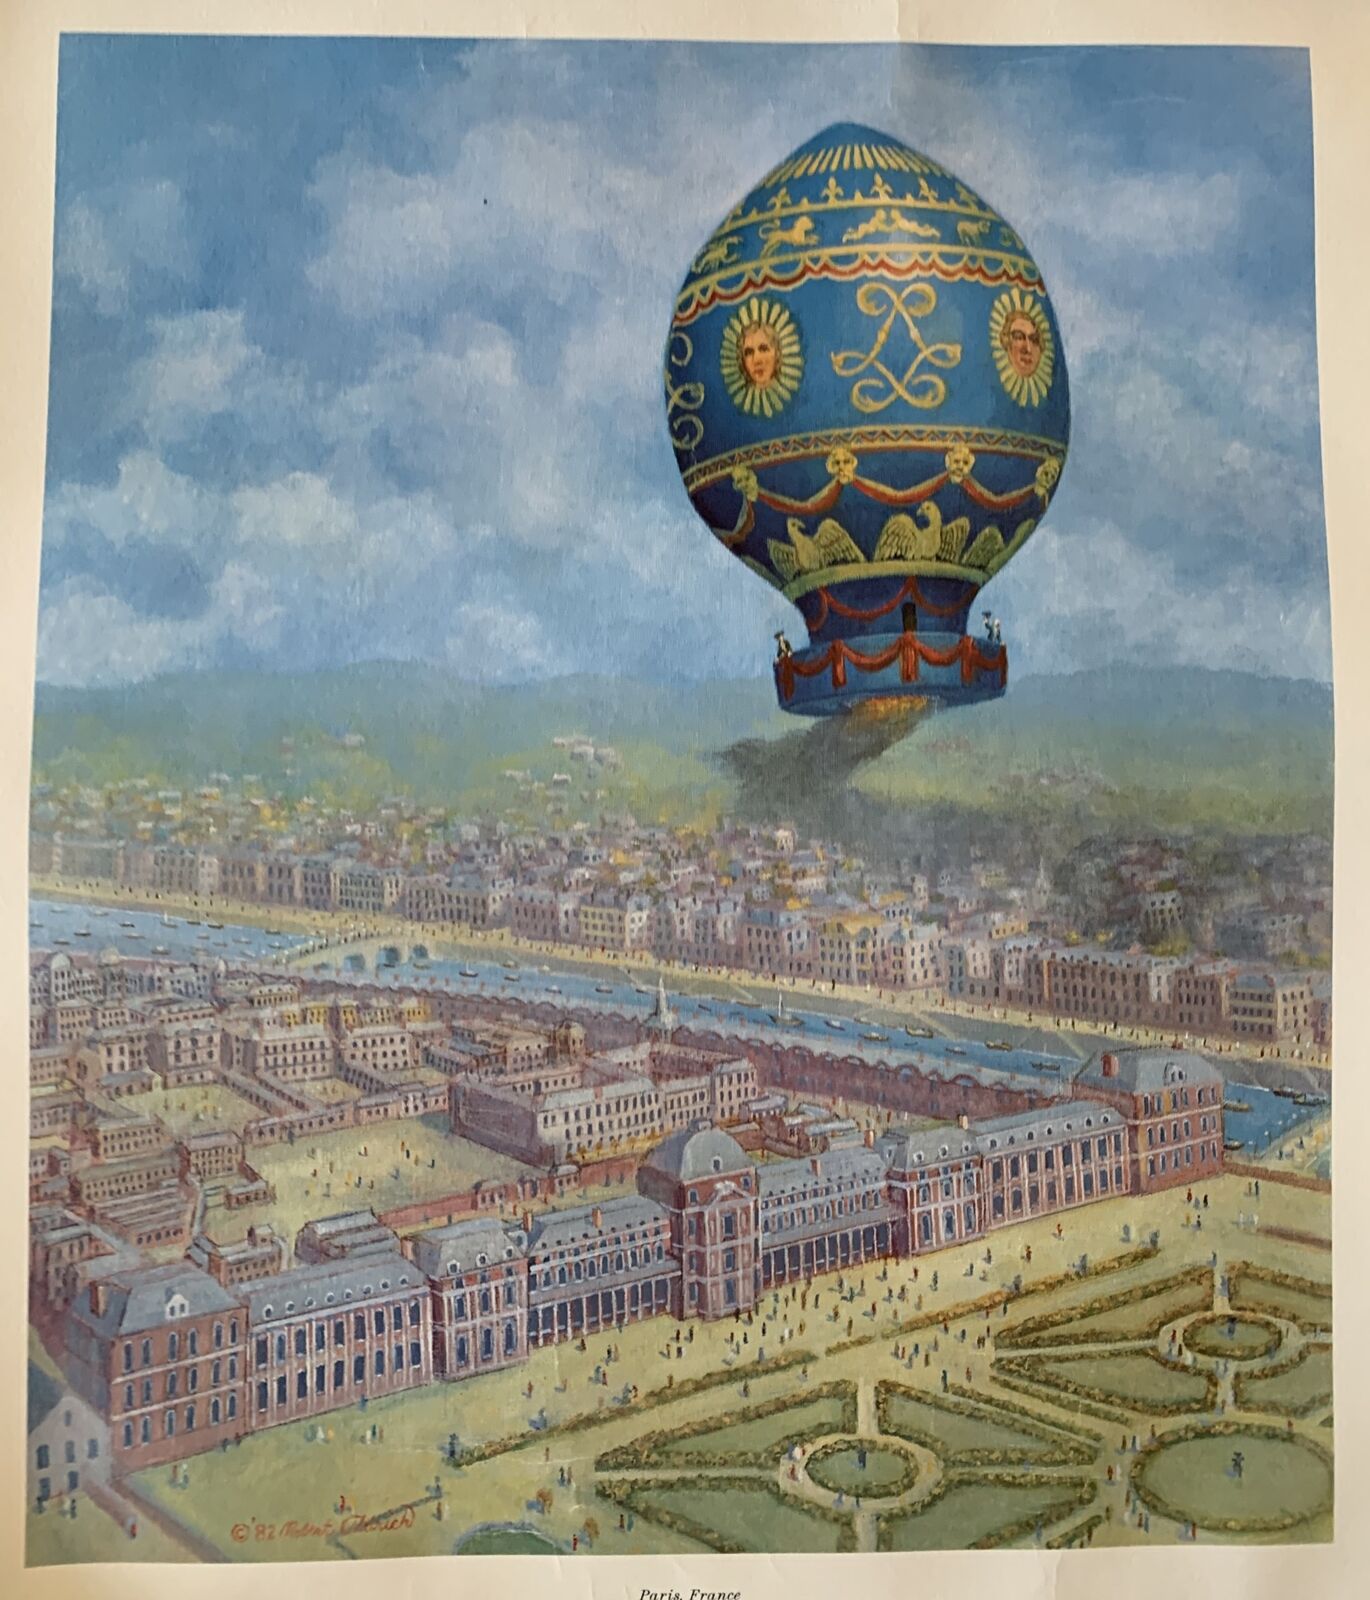 Vintage Balloon Poster Robert Aldrich 1982 The First Flight Of Man 1783 20”x24”